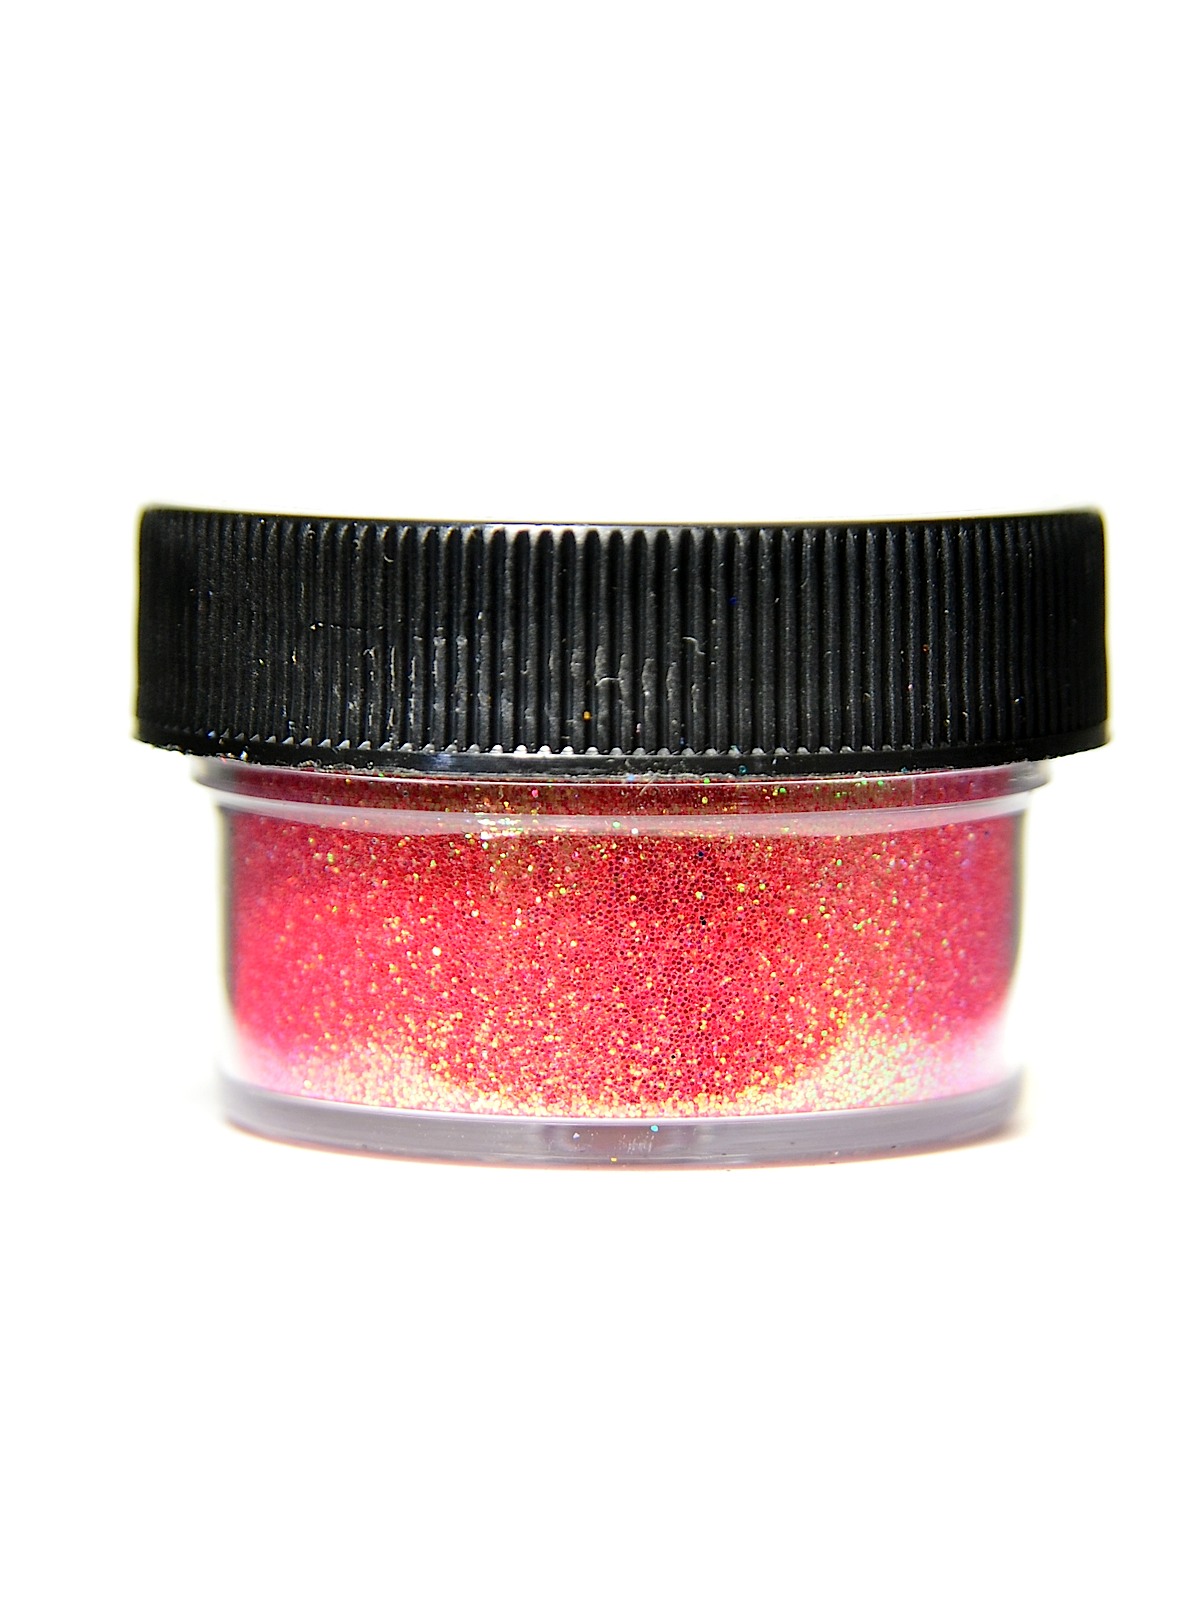 Ultrafine Transparent Glitter Coral Reef 1 2 Oz. Jar